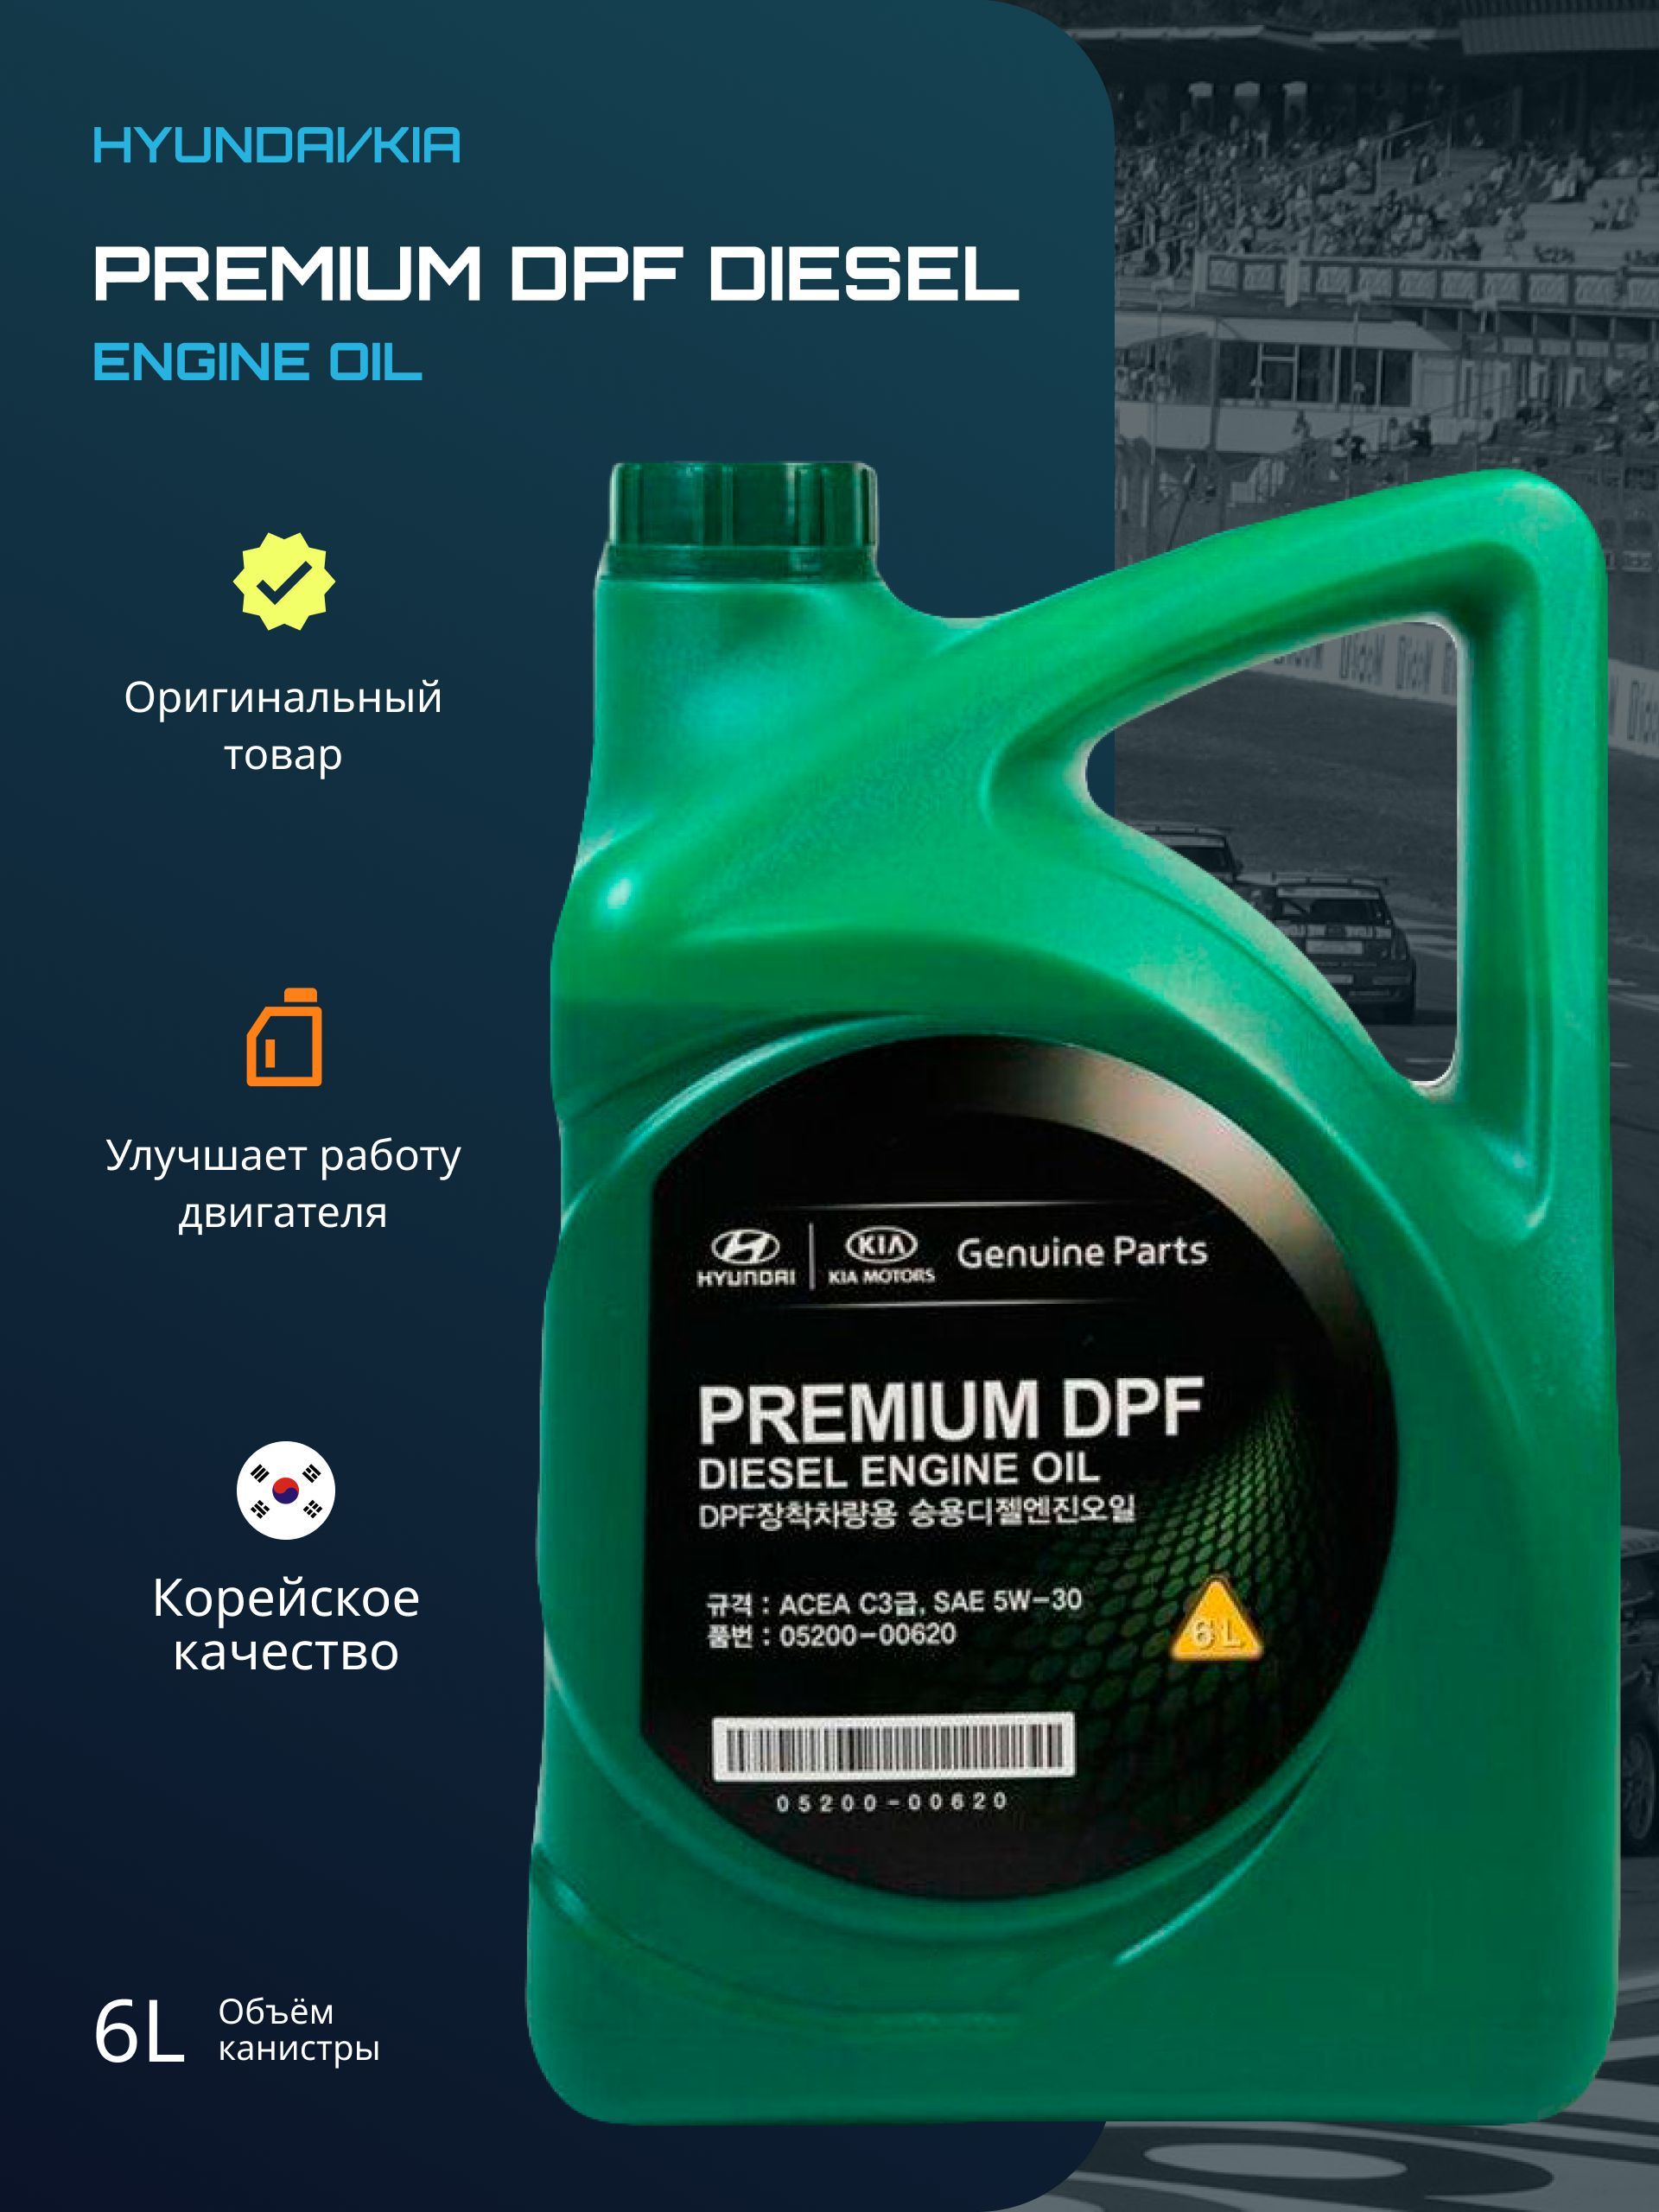 Hyundai Premium DPF Diesel. 0520000620 Hyundai-Kia масло мотор. 6л. Prem. DPF Diesel 5w-30. Как расшифровать дату производства масла Kia Premium DPF Diesel. Масло kia premium dpf diesel